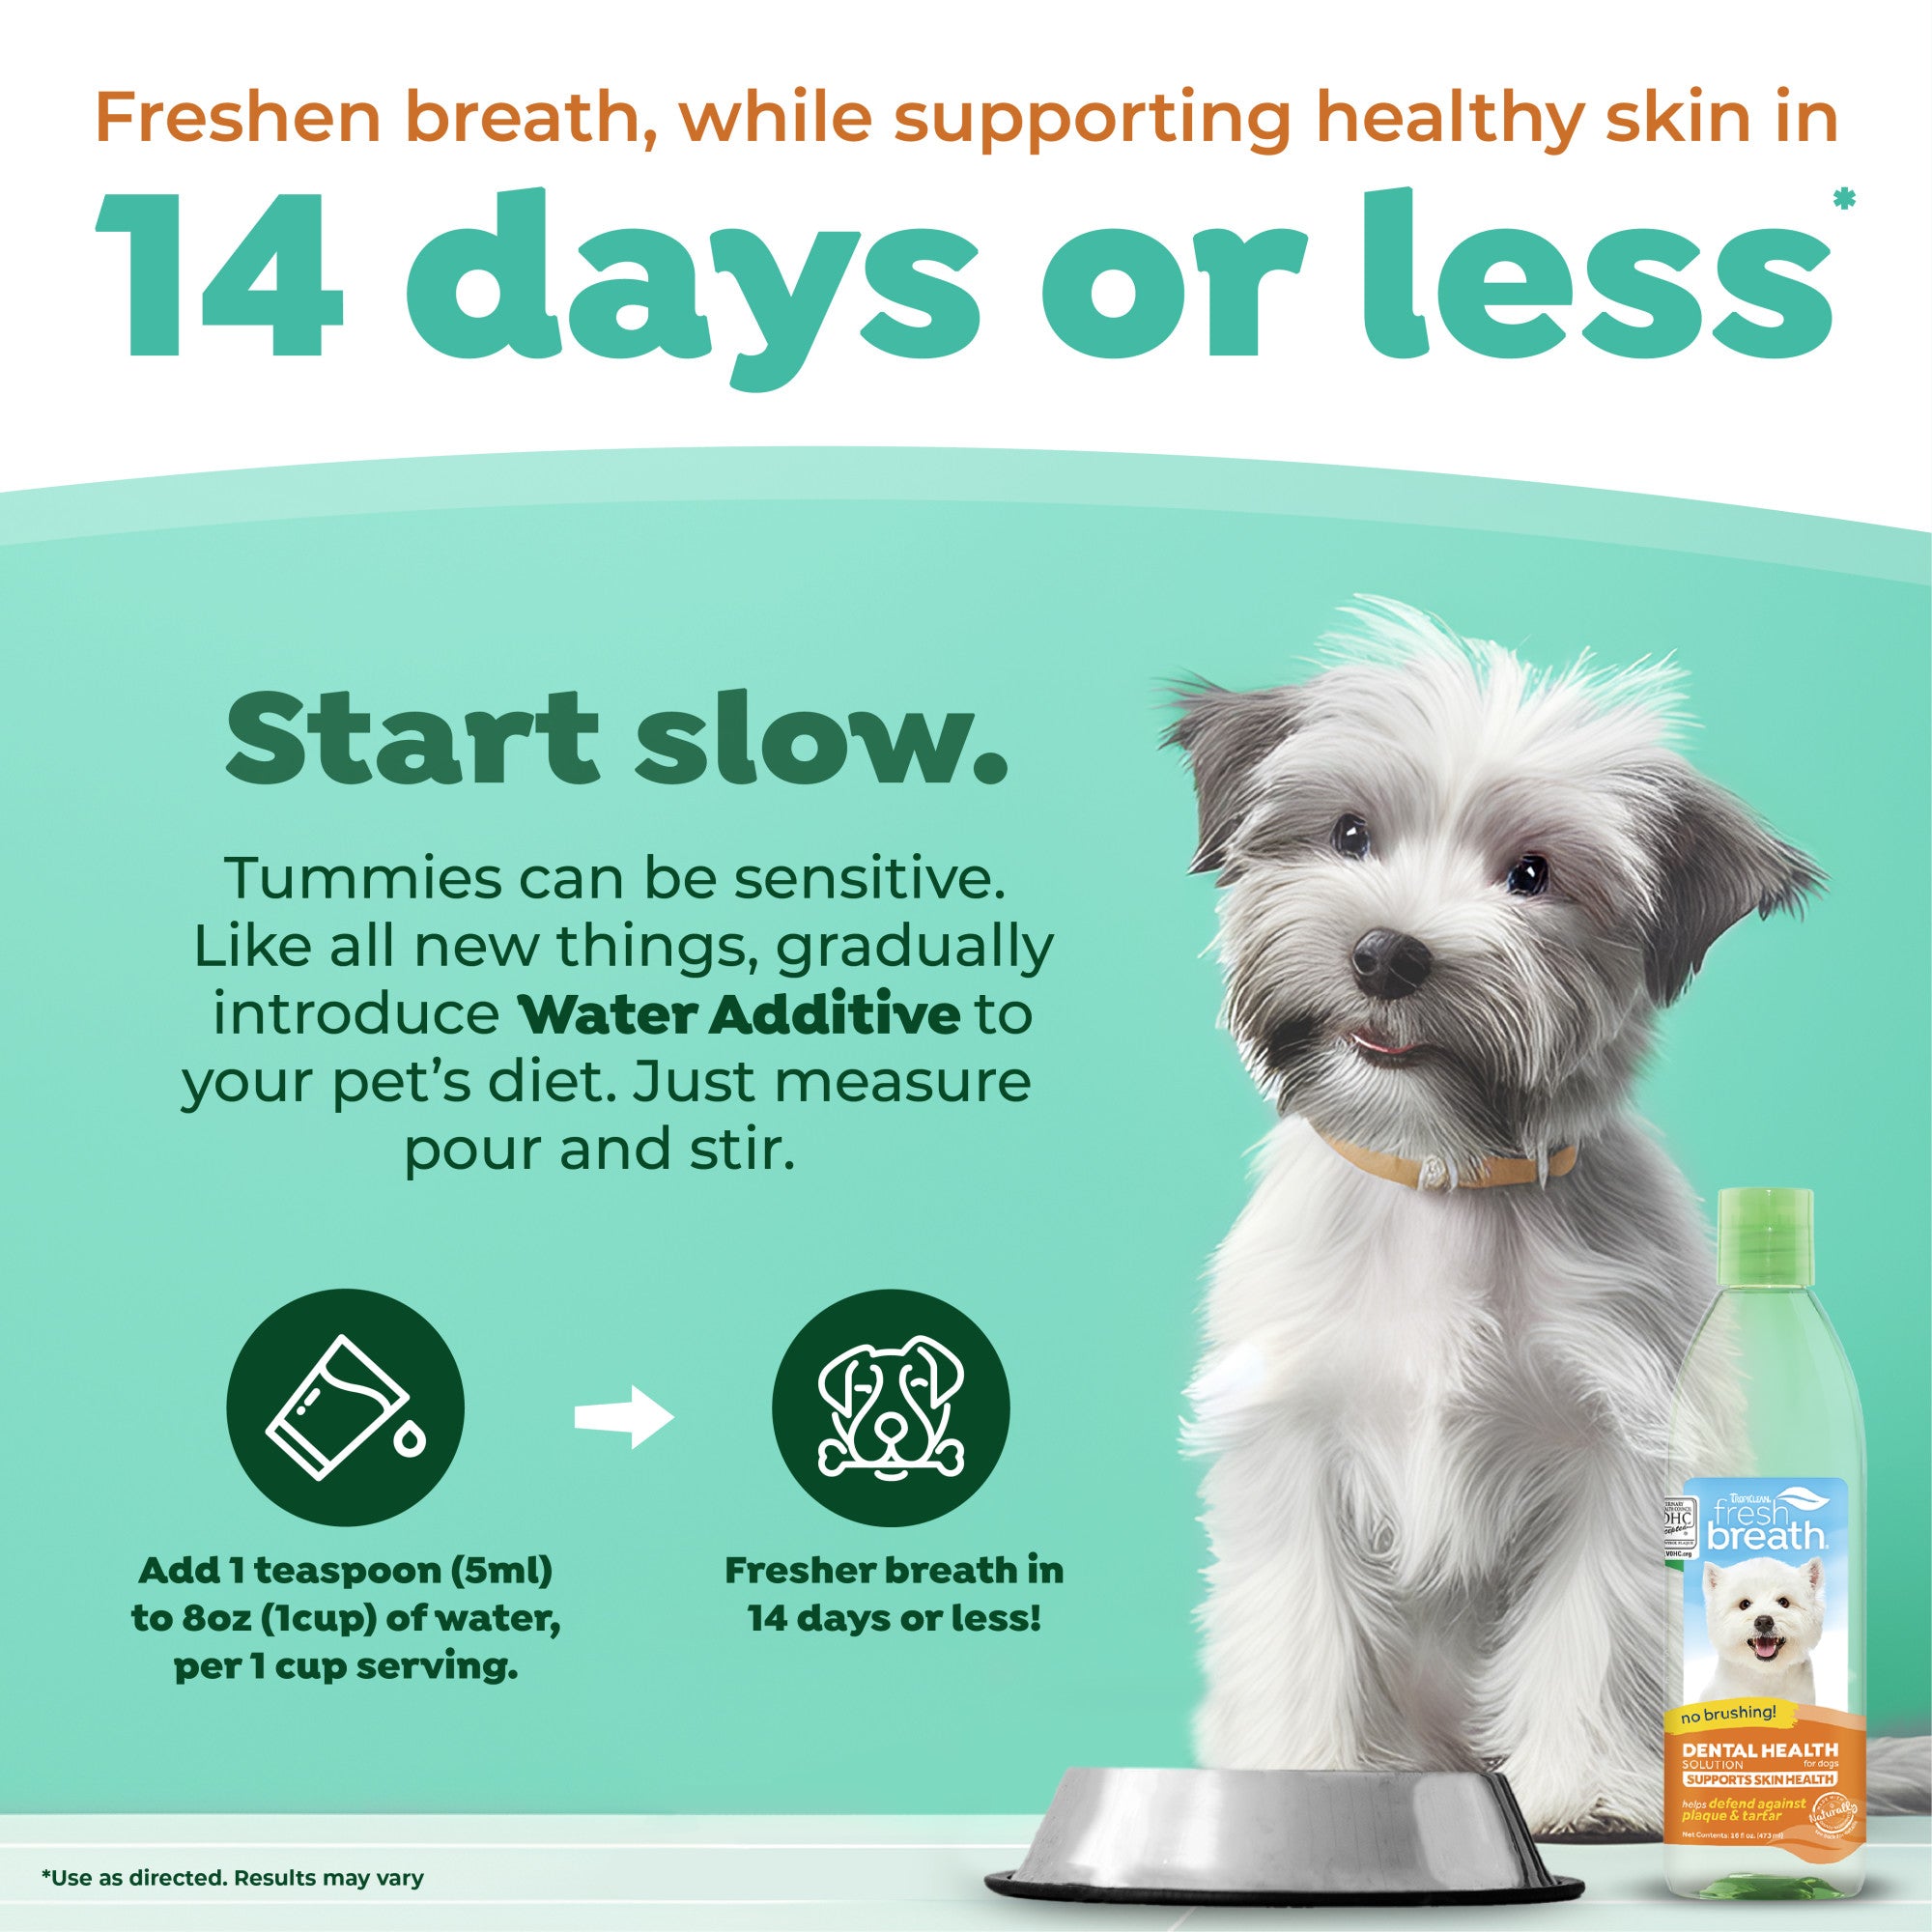 TropiClean Fresh Breath Dental Health Solution Supports Skin Health 473ml